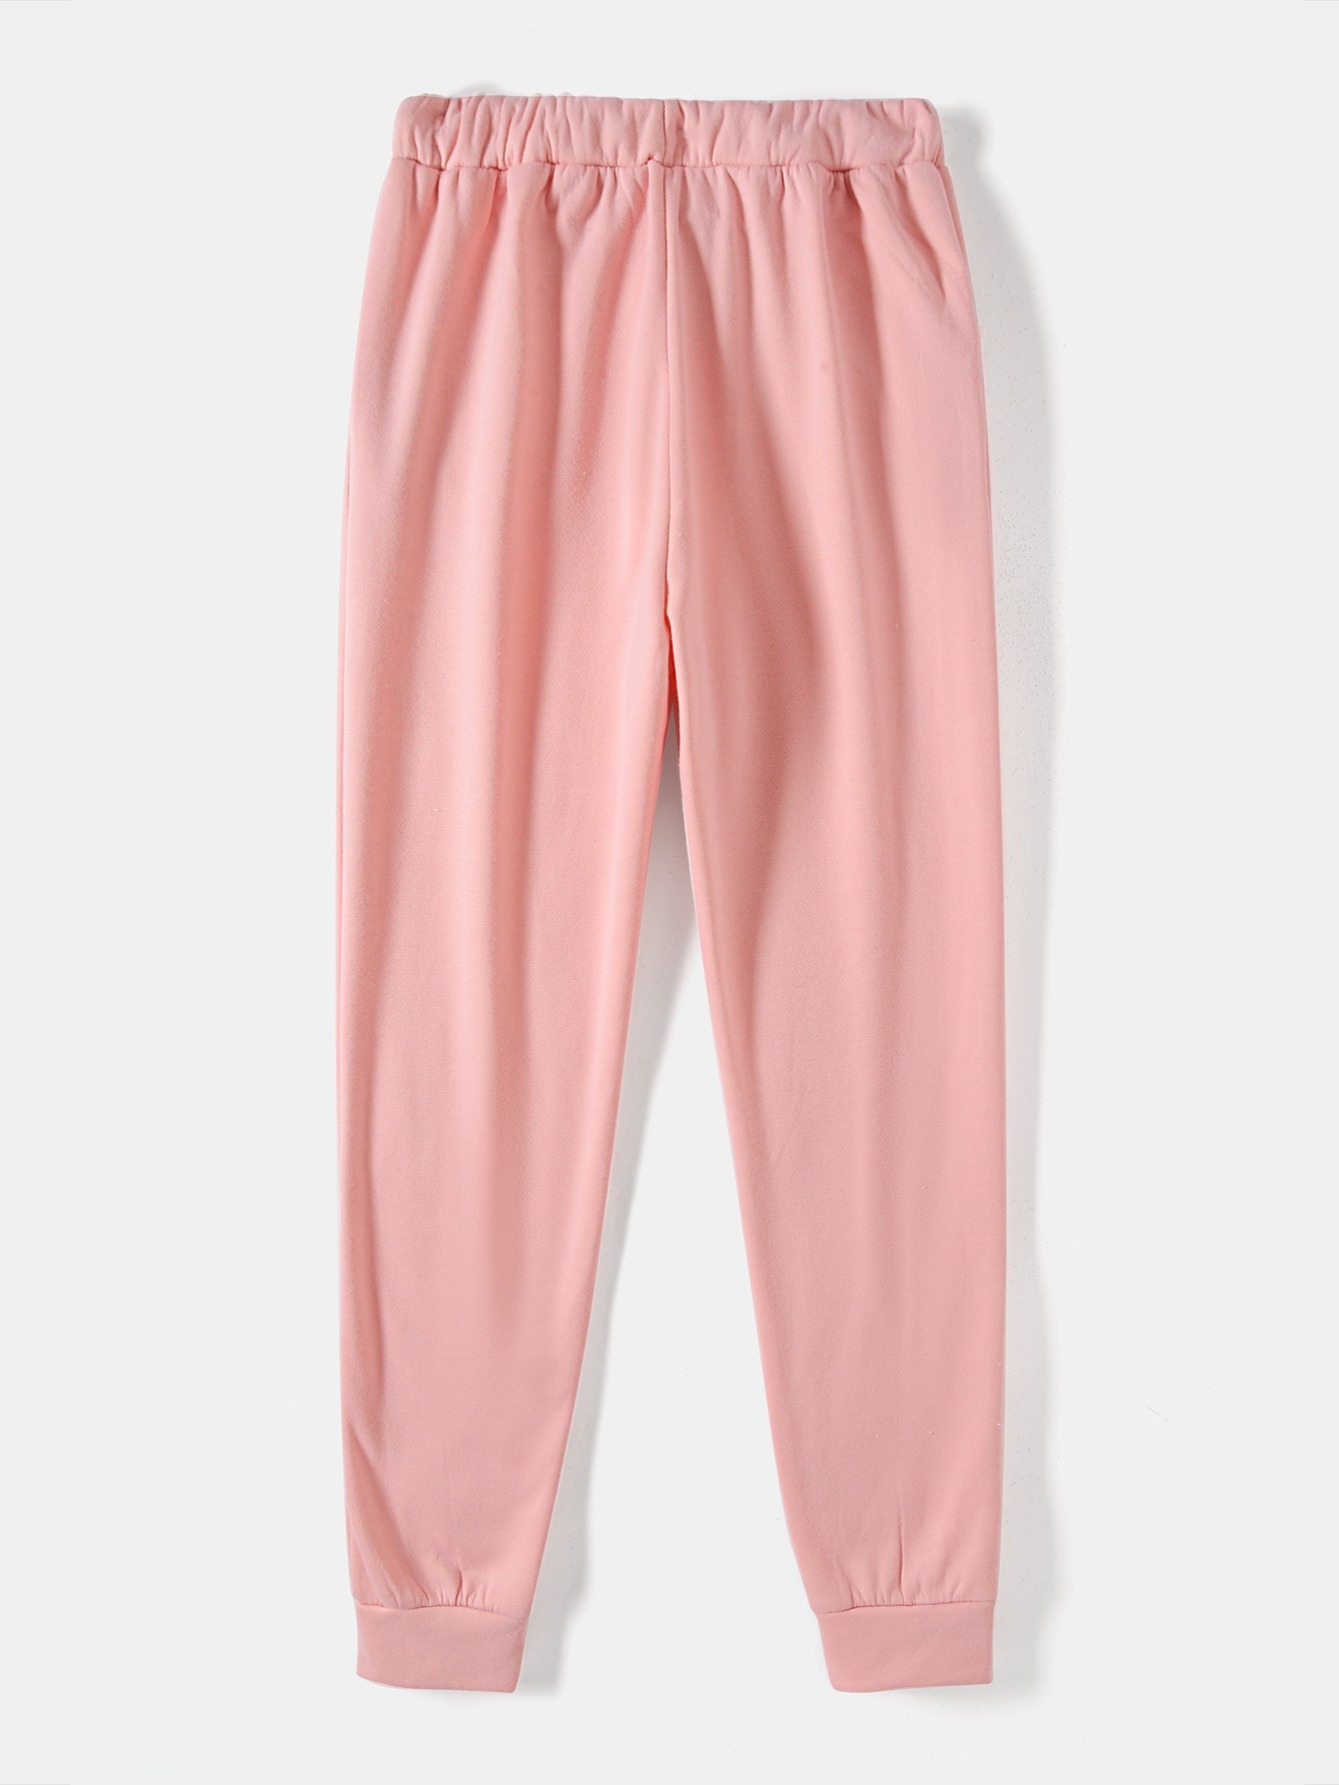 solid drawstring thermal sweatpants versatile loose comfy jogger pants womens clothing details 33